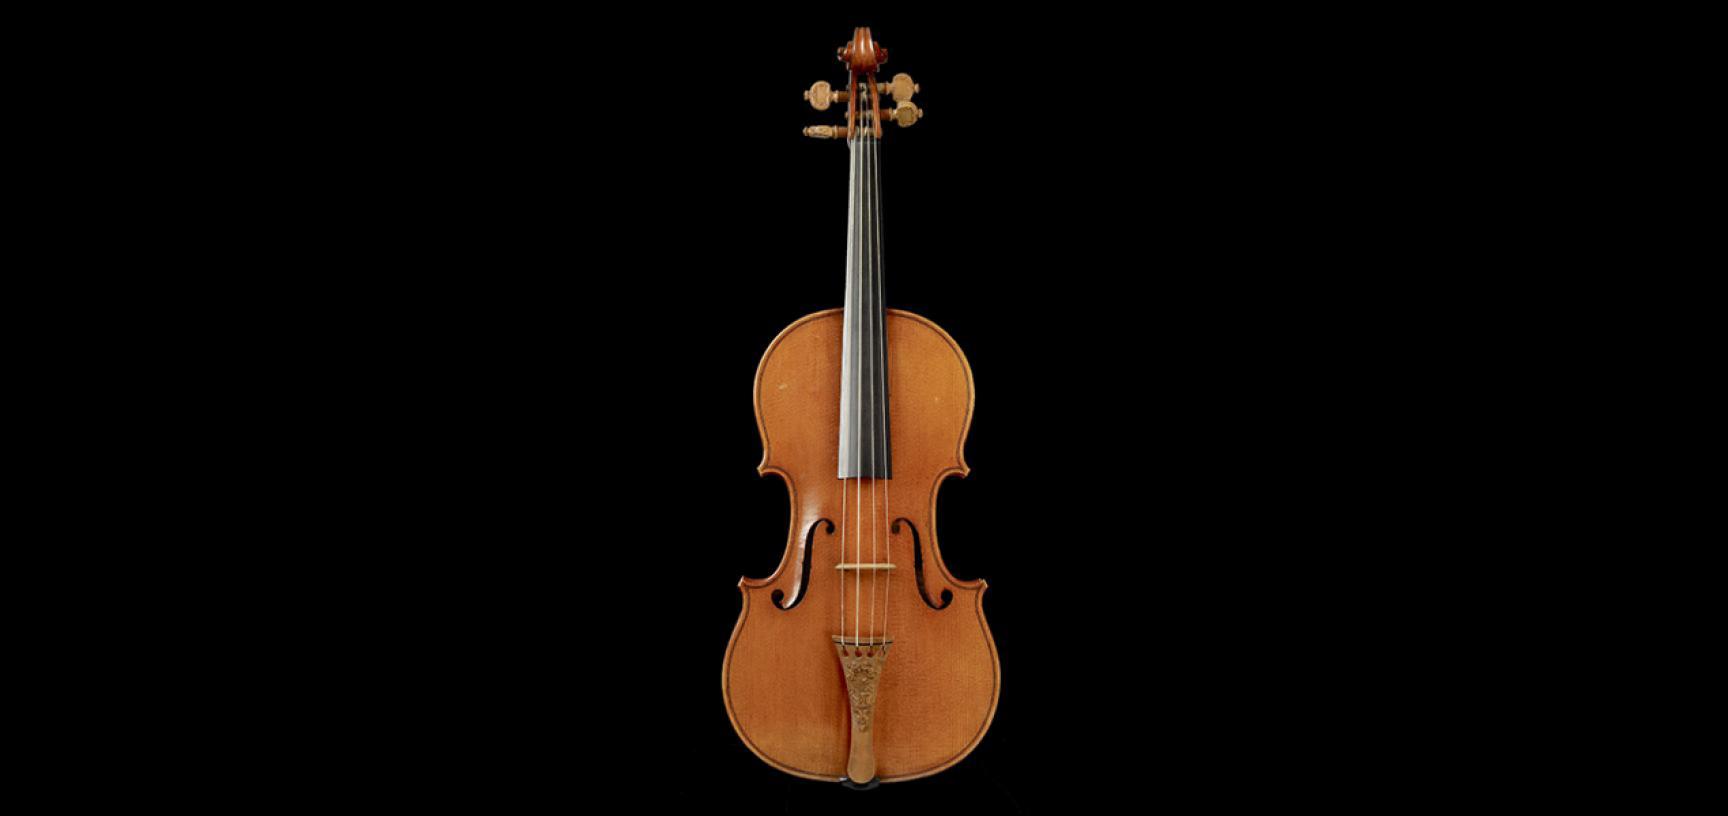 The ‘Messiah’ Violin by Antonio Stradivari